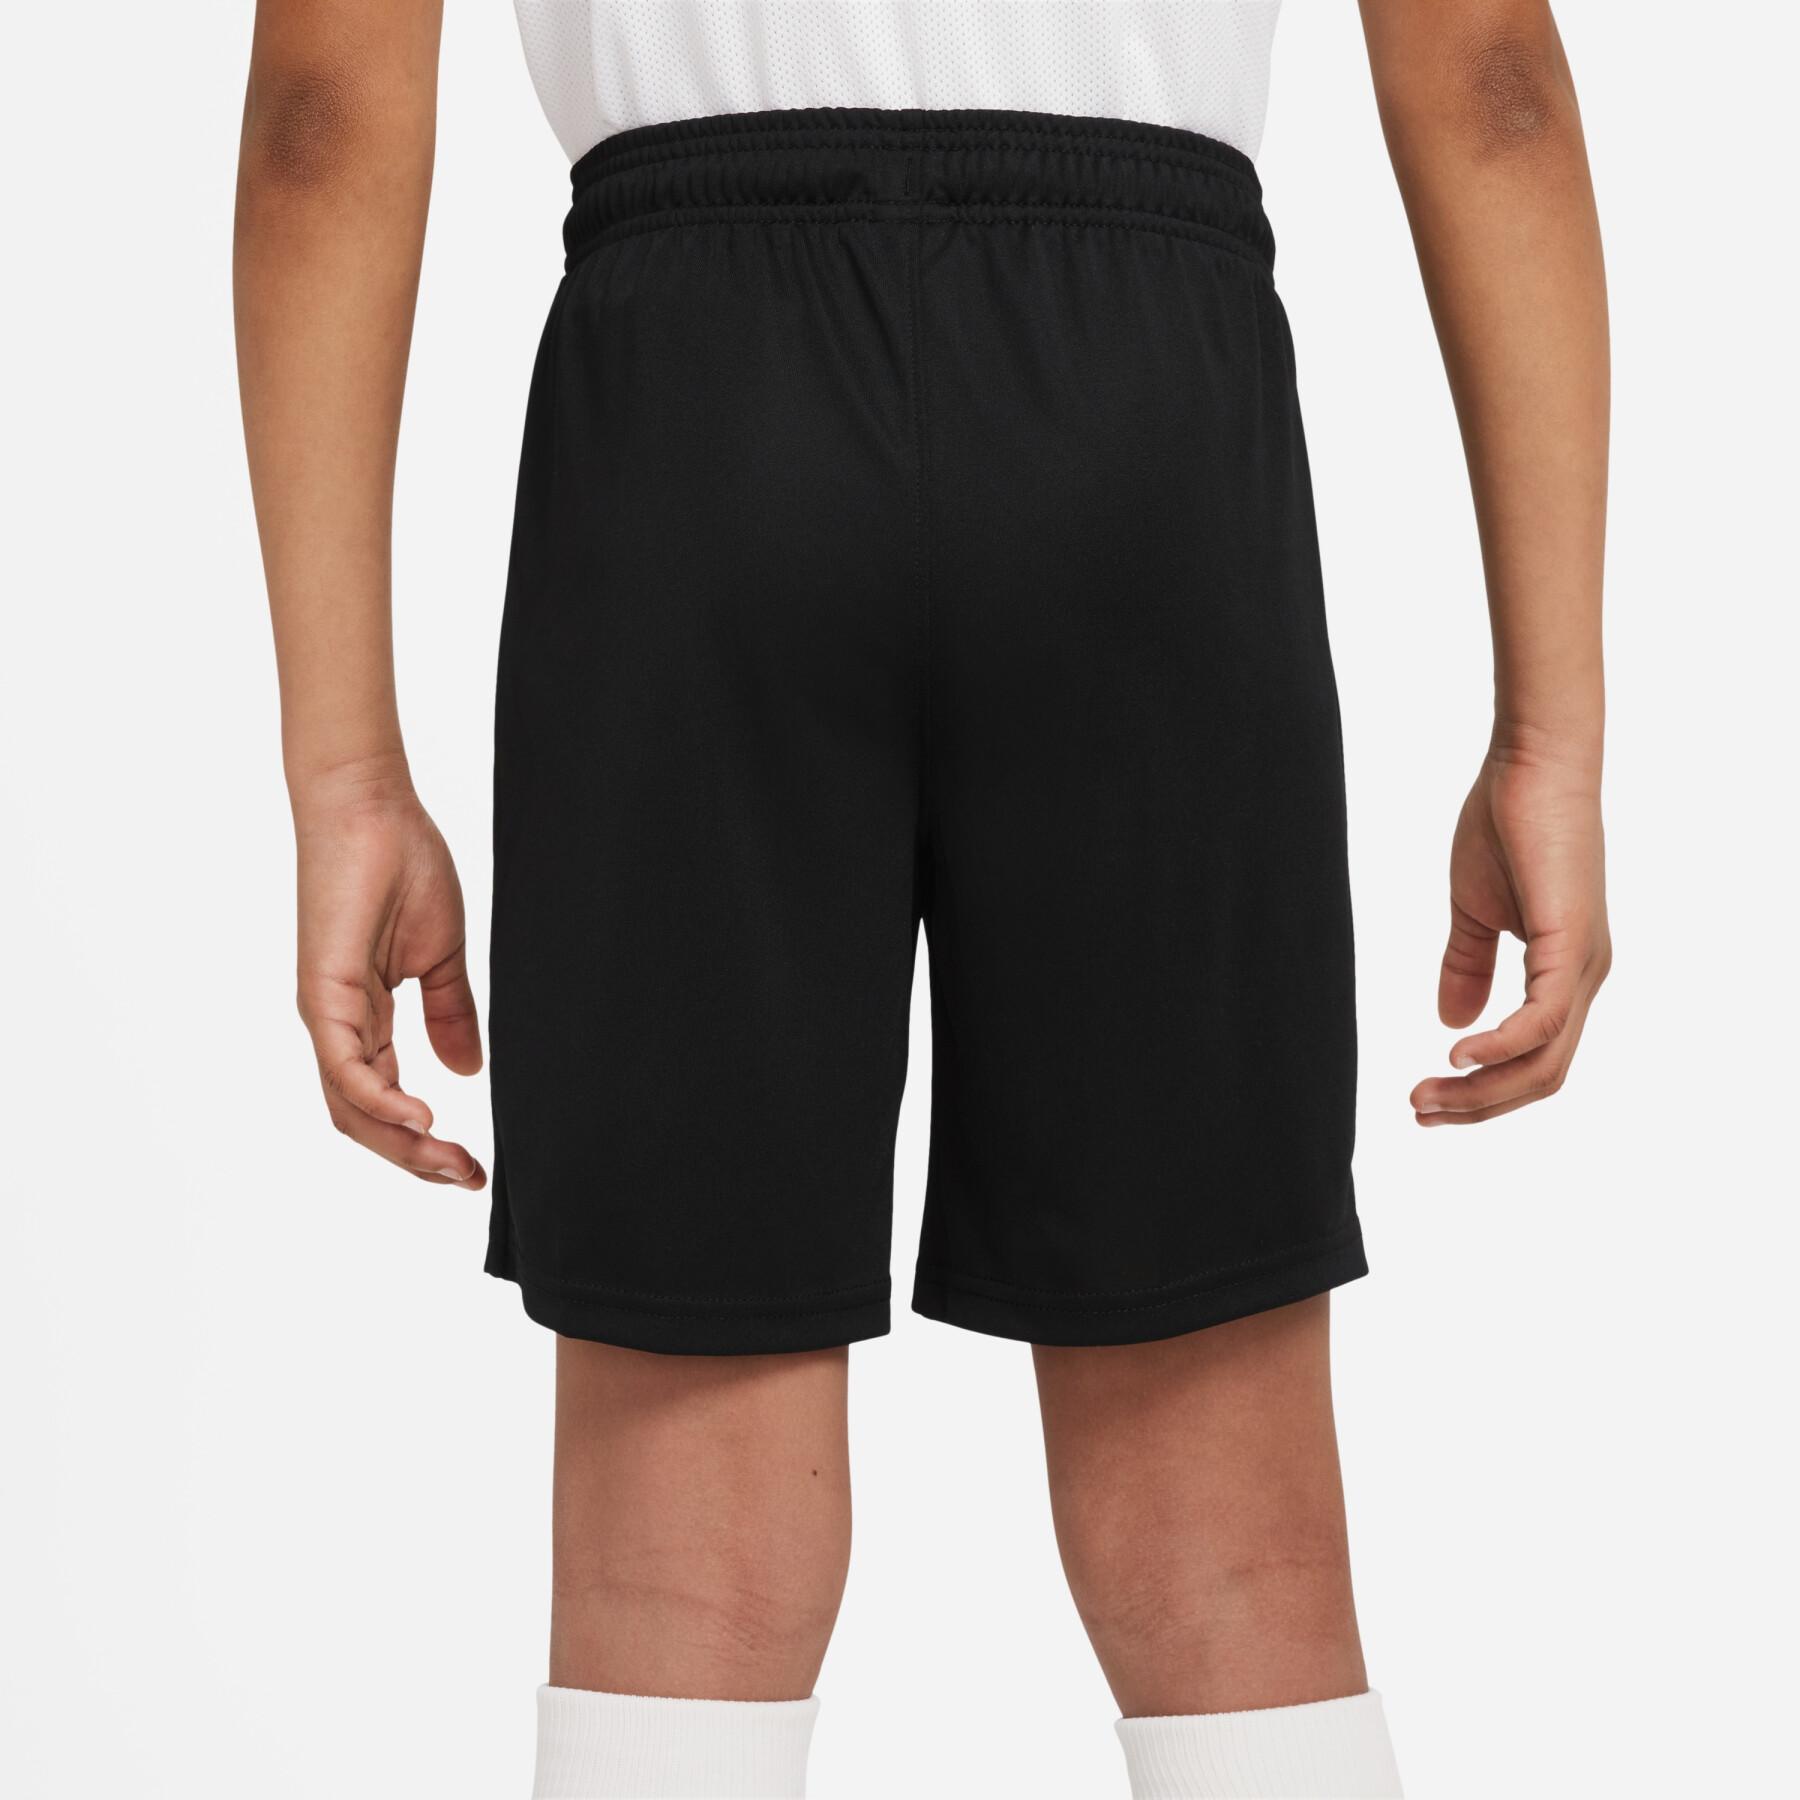 Kinder shorts Nike Dynamic Fit Park20